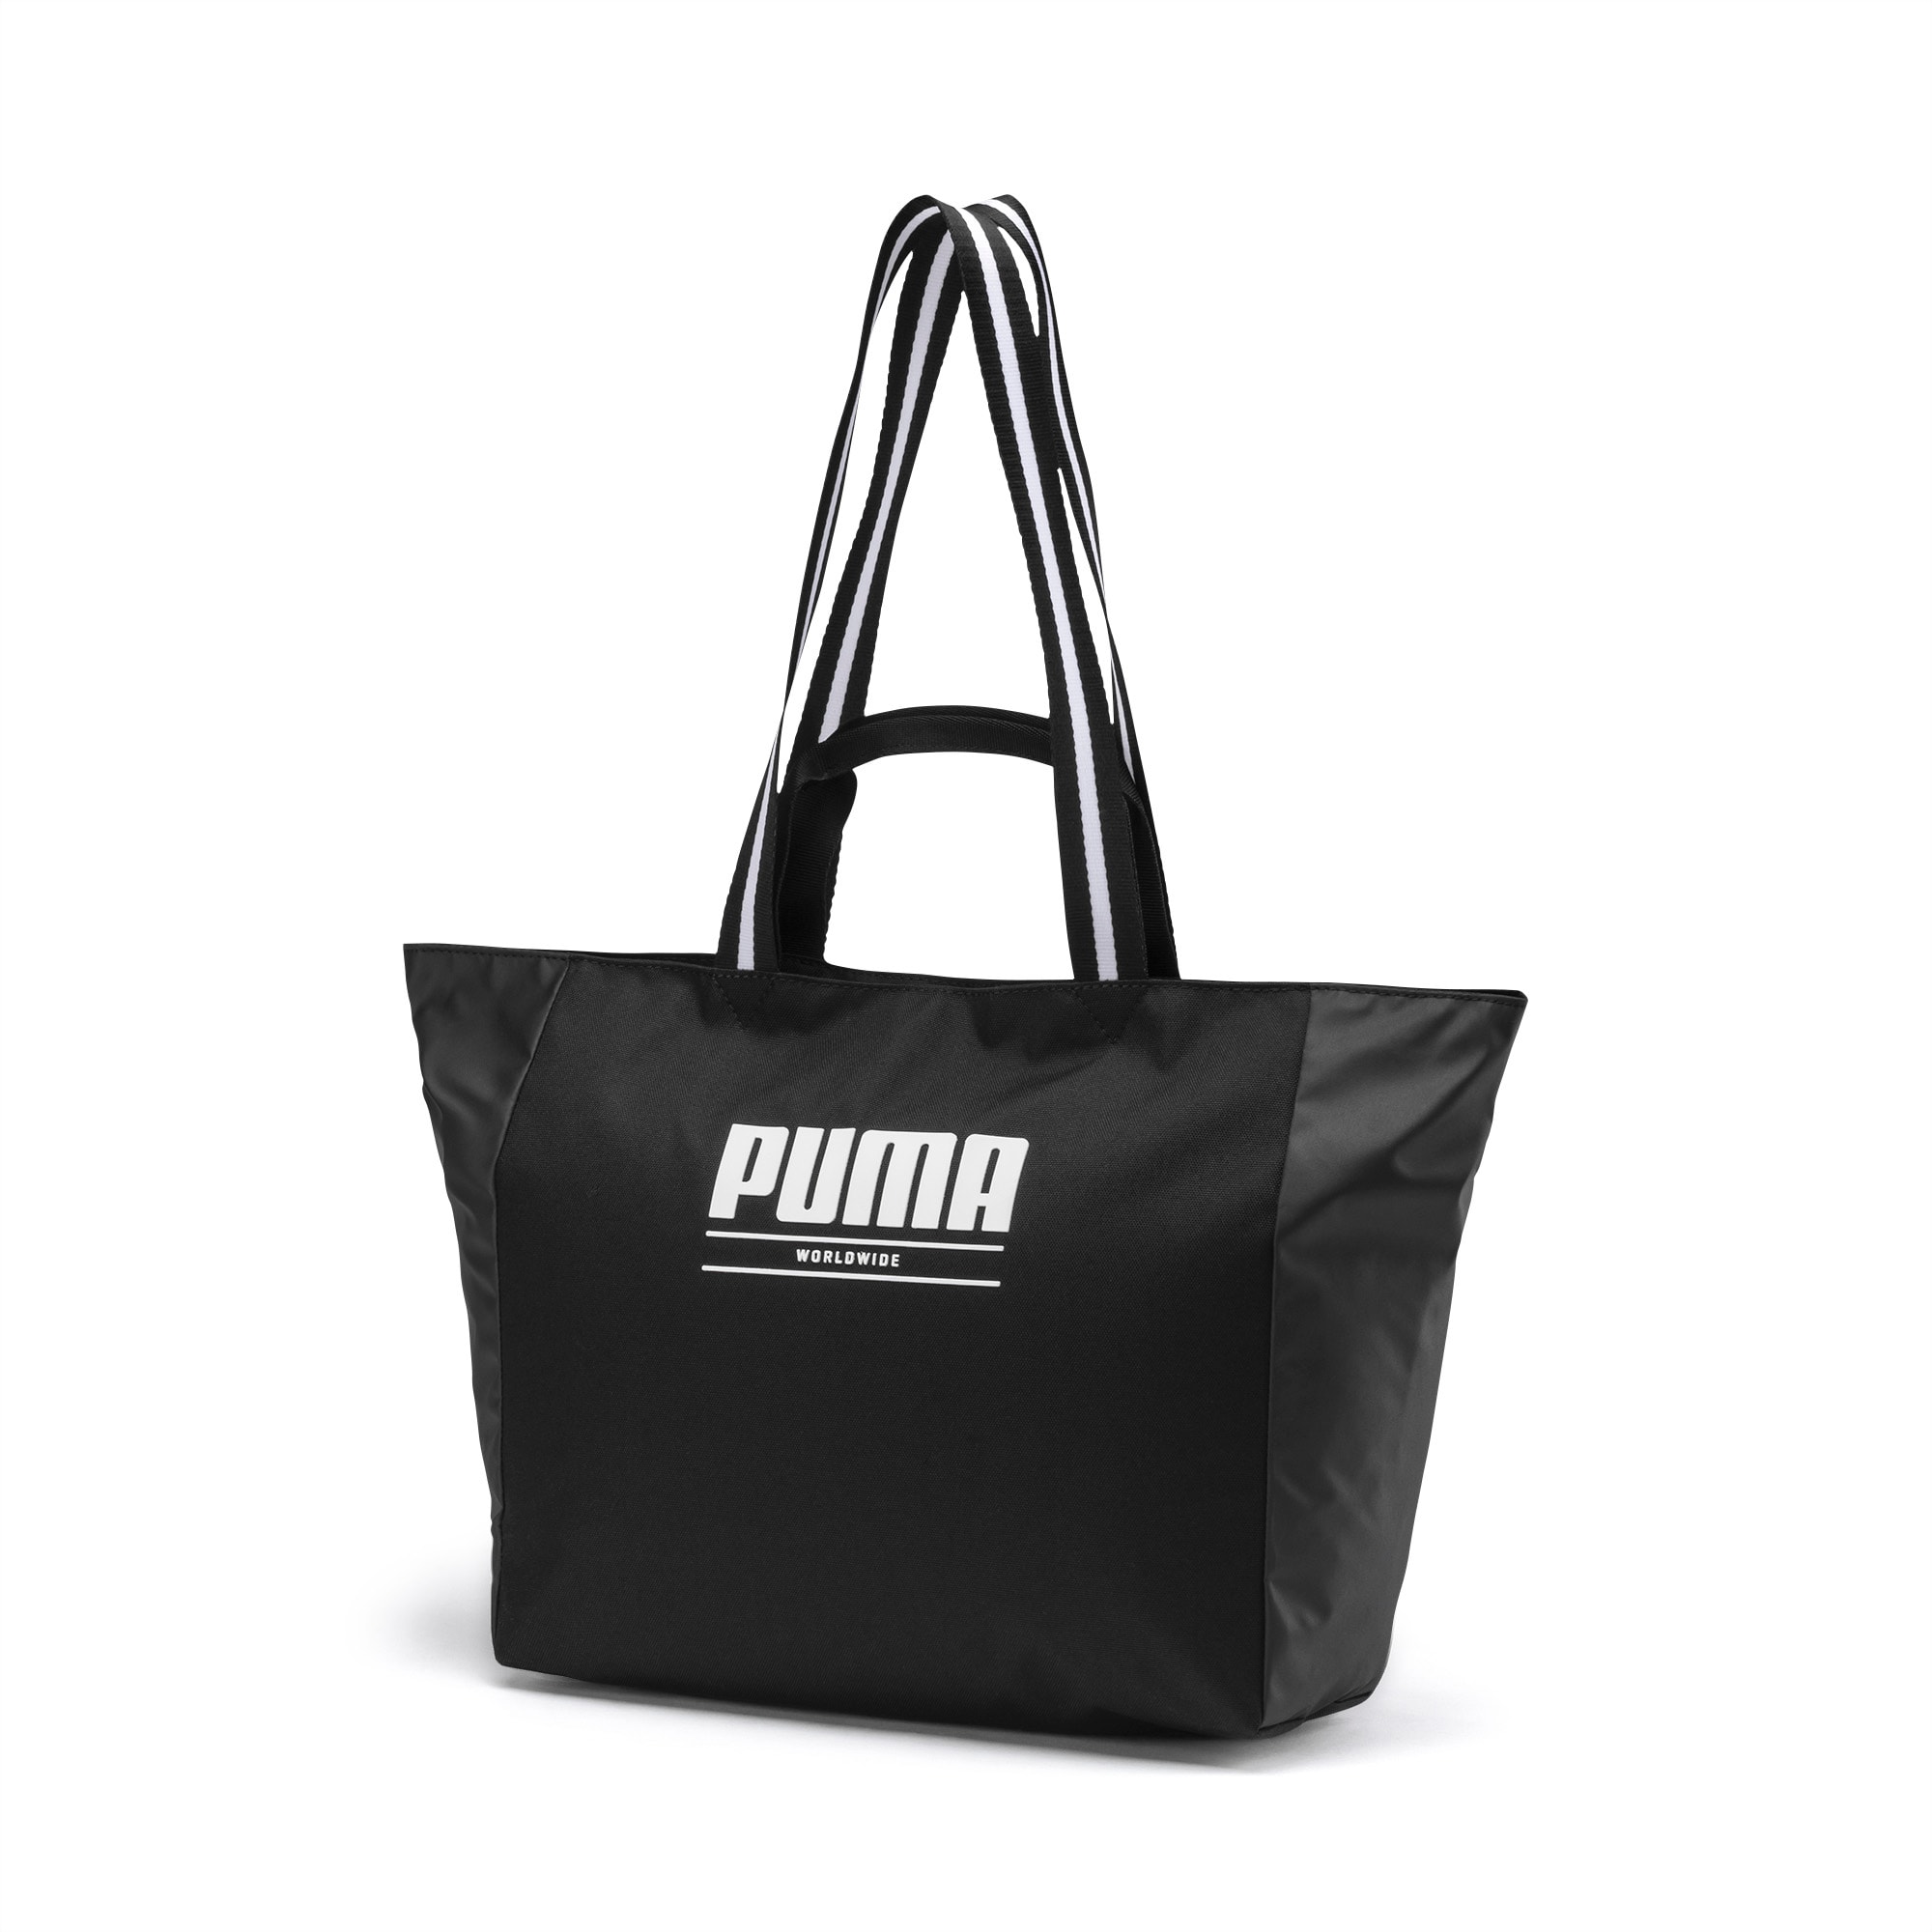 puma big bags